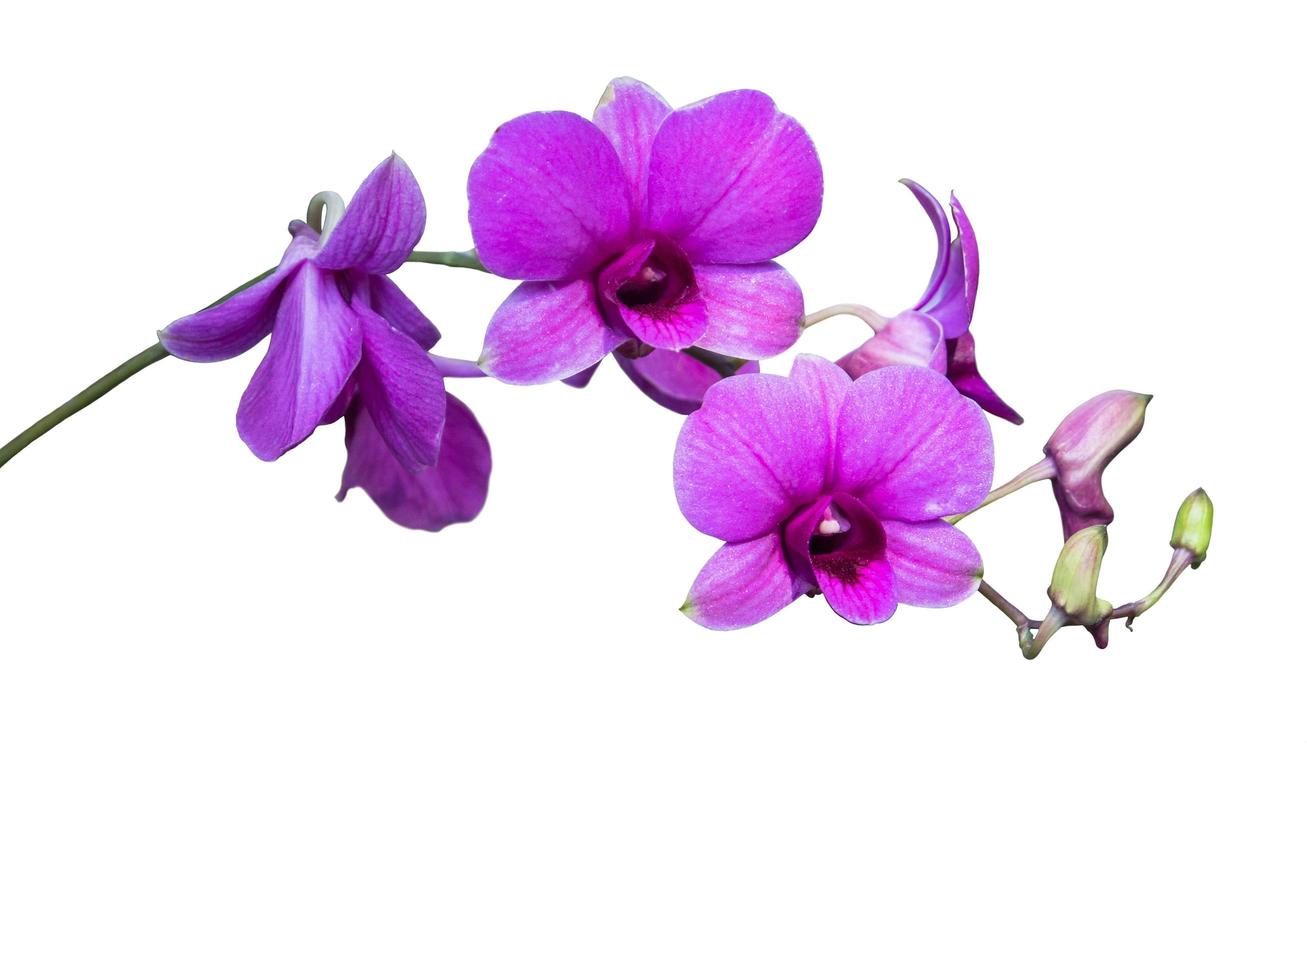 enano púrpura o mini orquídea con un ramo de flores florecientes, phalaenopsis calimero, aislado sobre fondo blanco foto